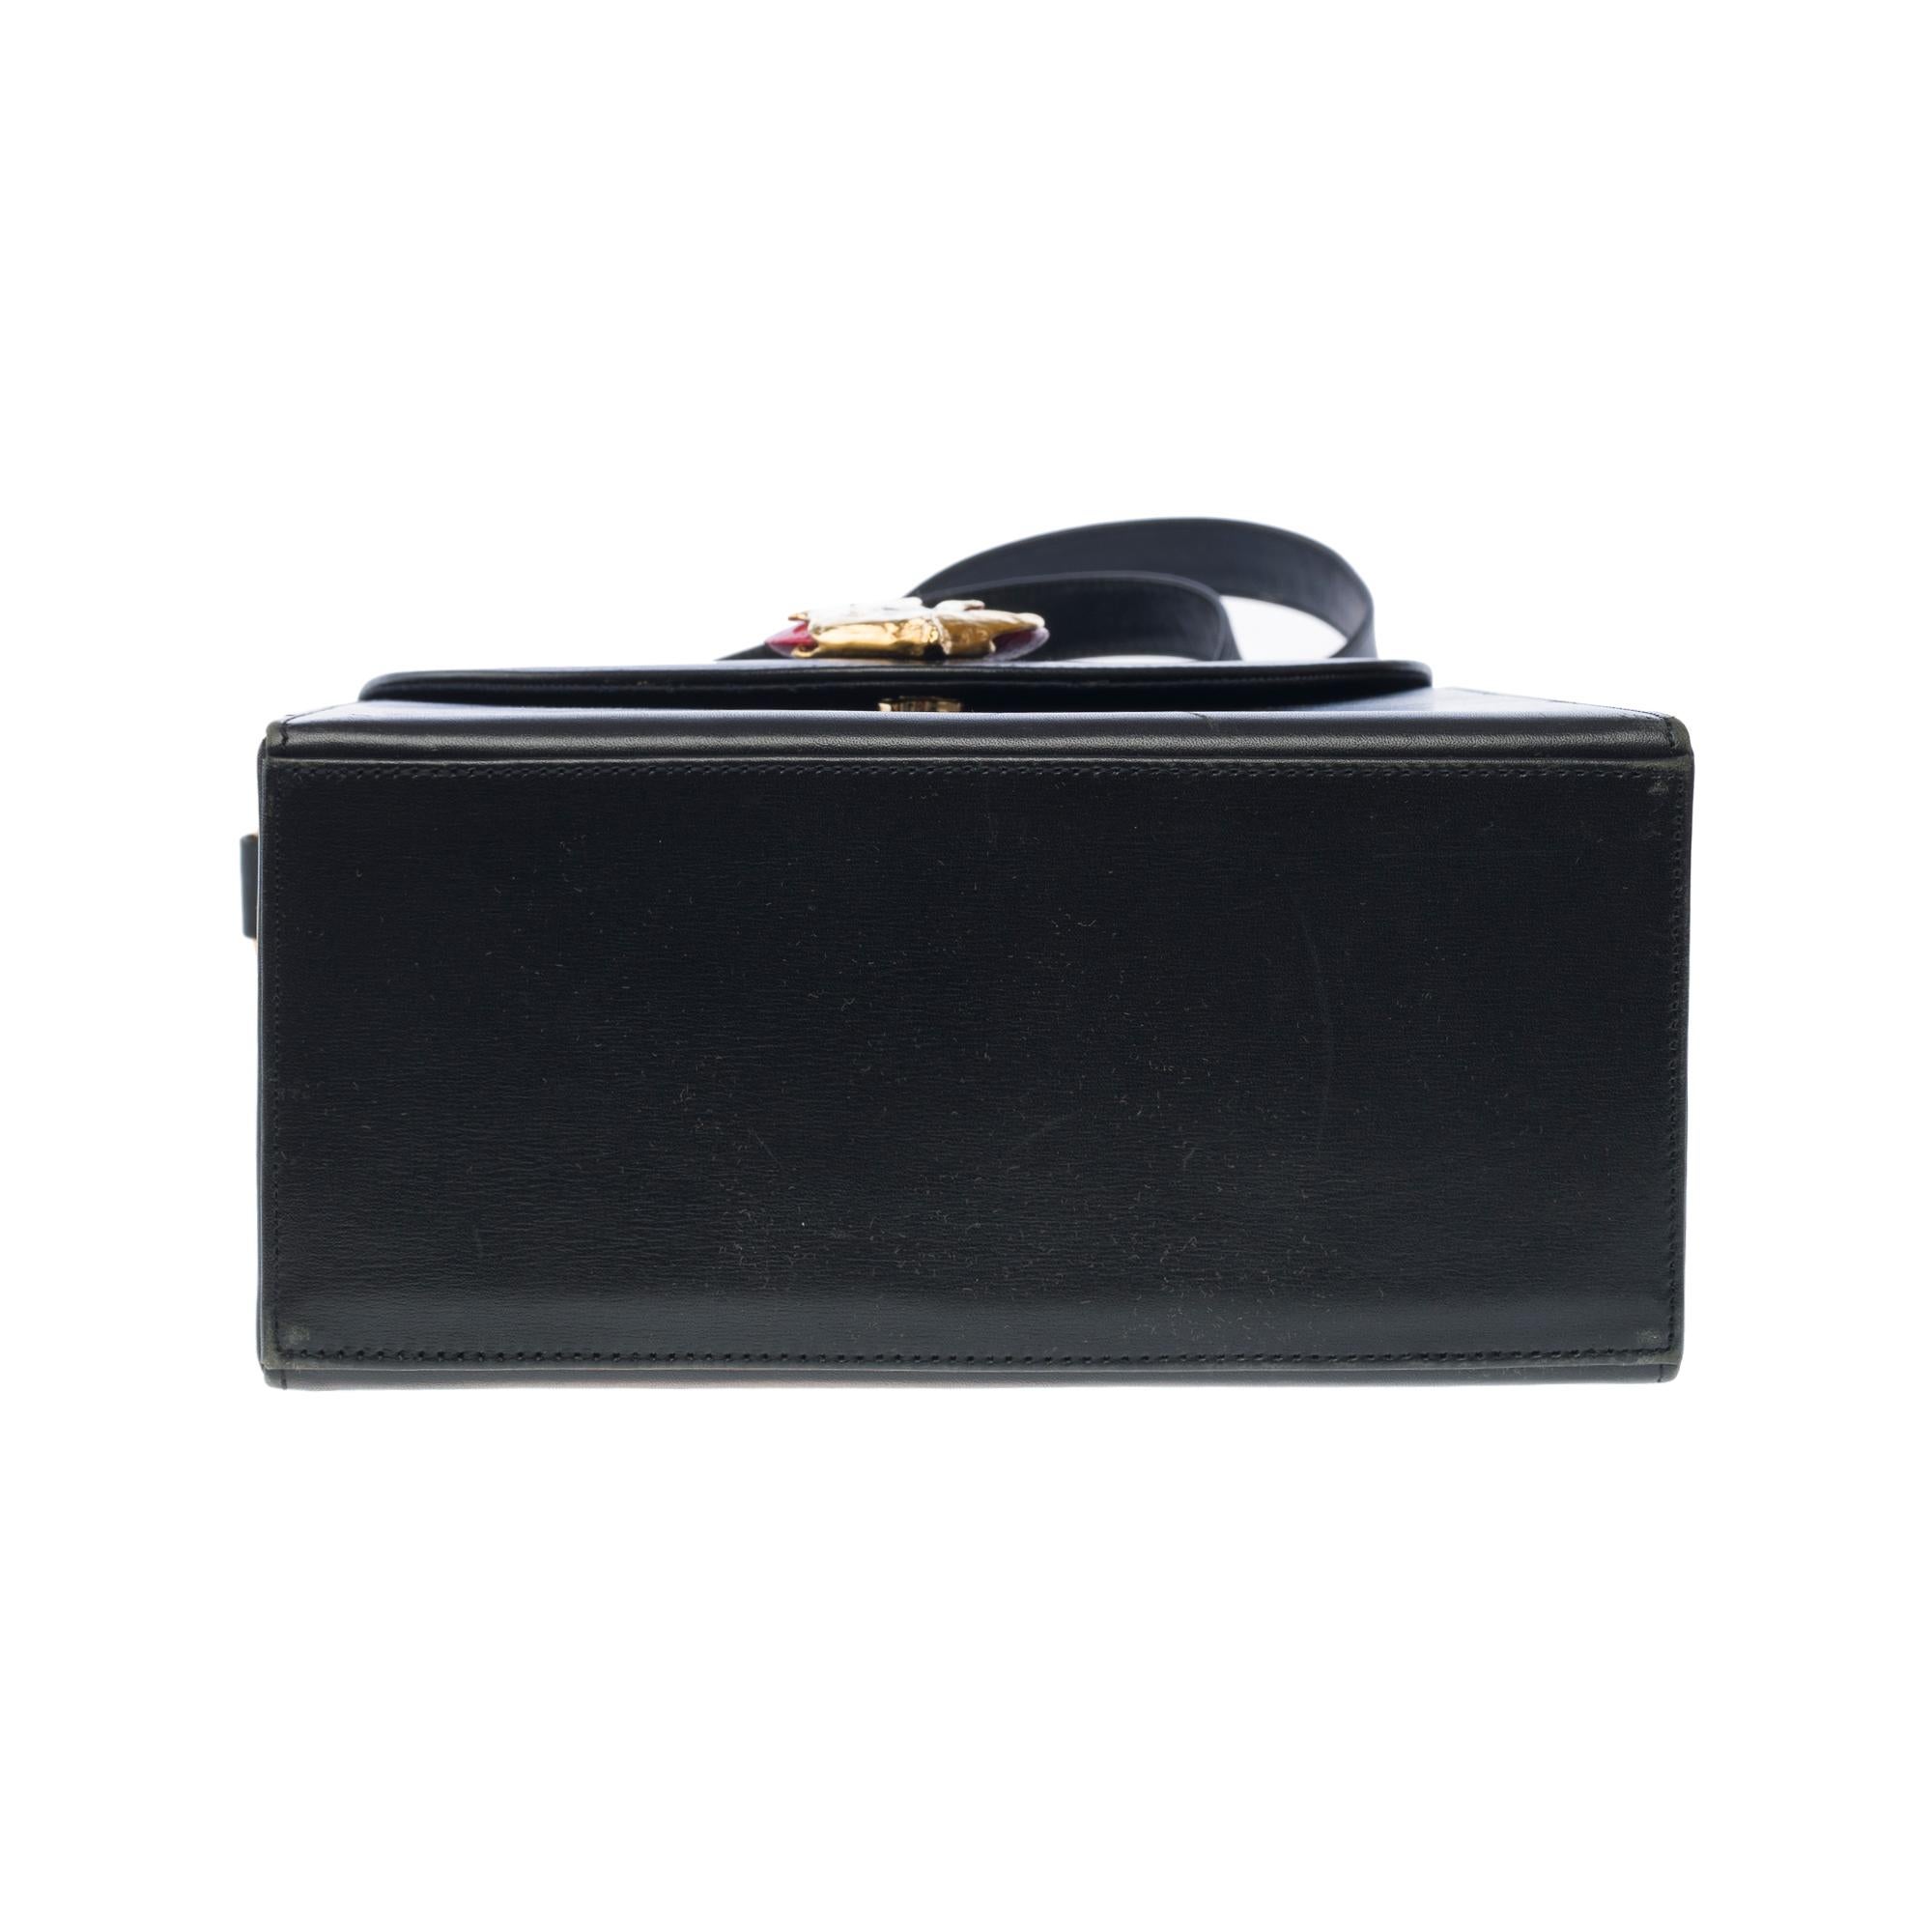 Lovely YSL vintage Messenger bag in black box calf leather, GHW For Sale 6